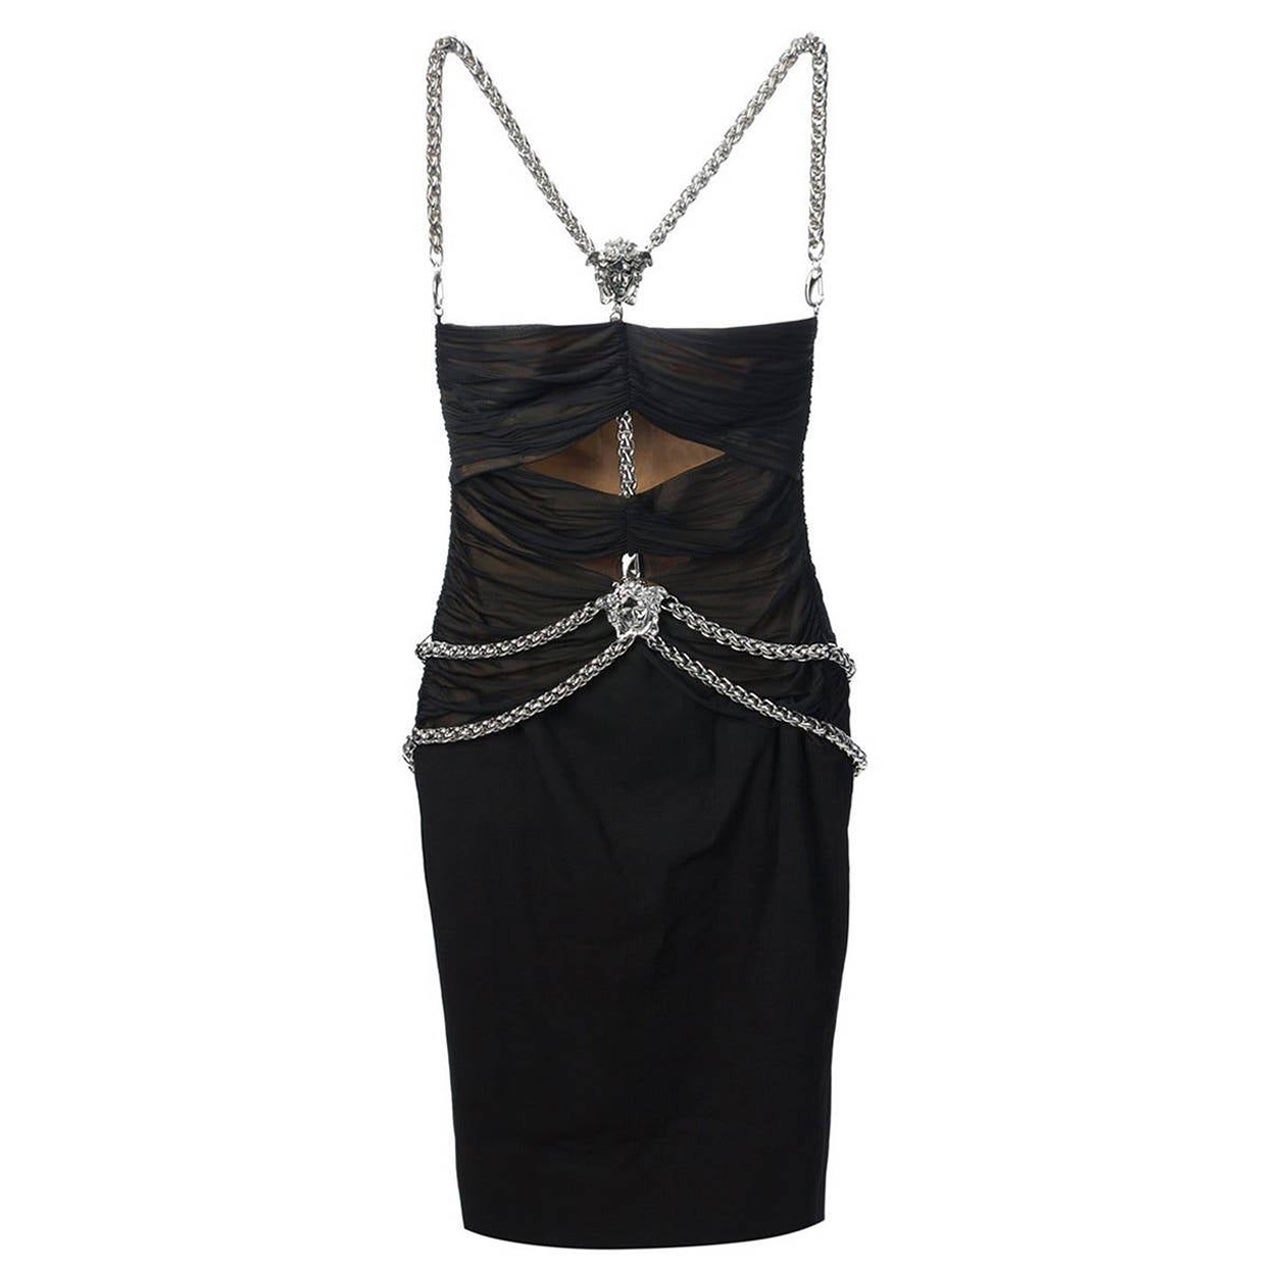 New Versace Medusa Black Dress 38 - 2 For Sale